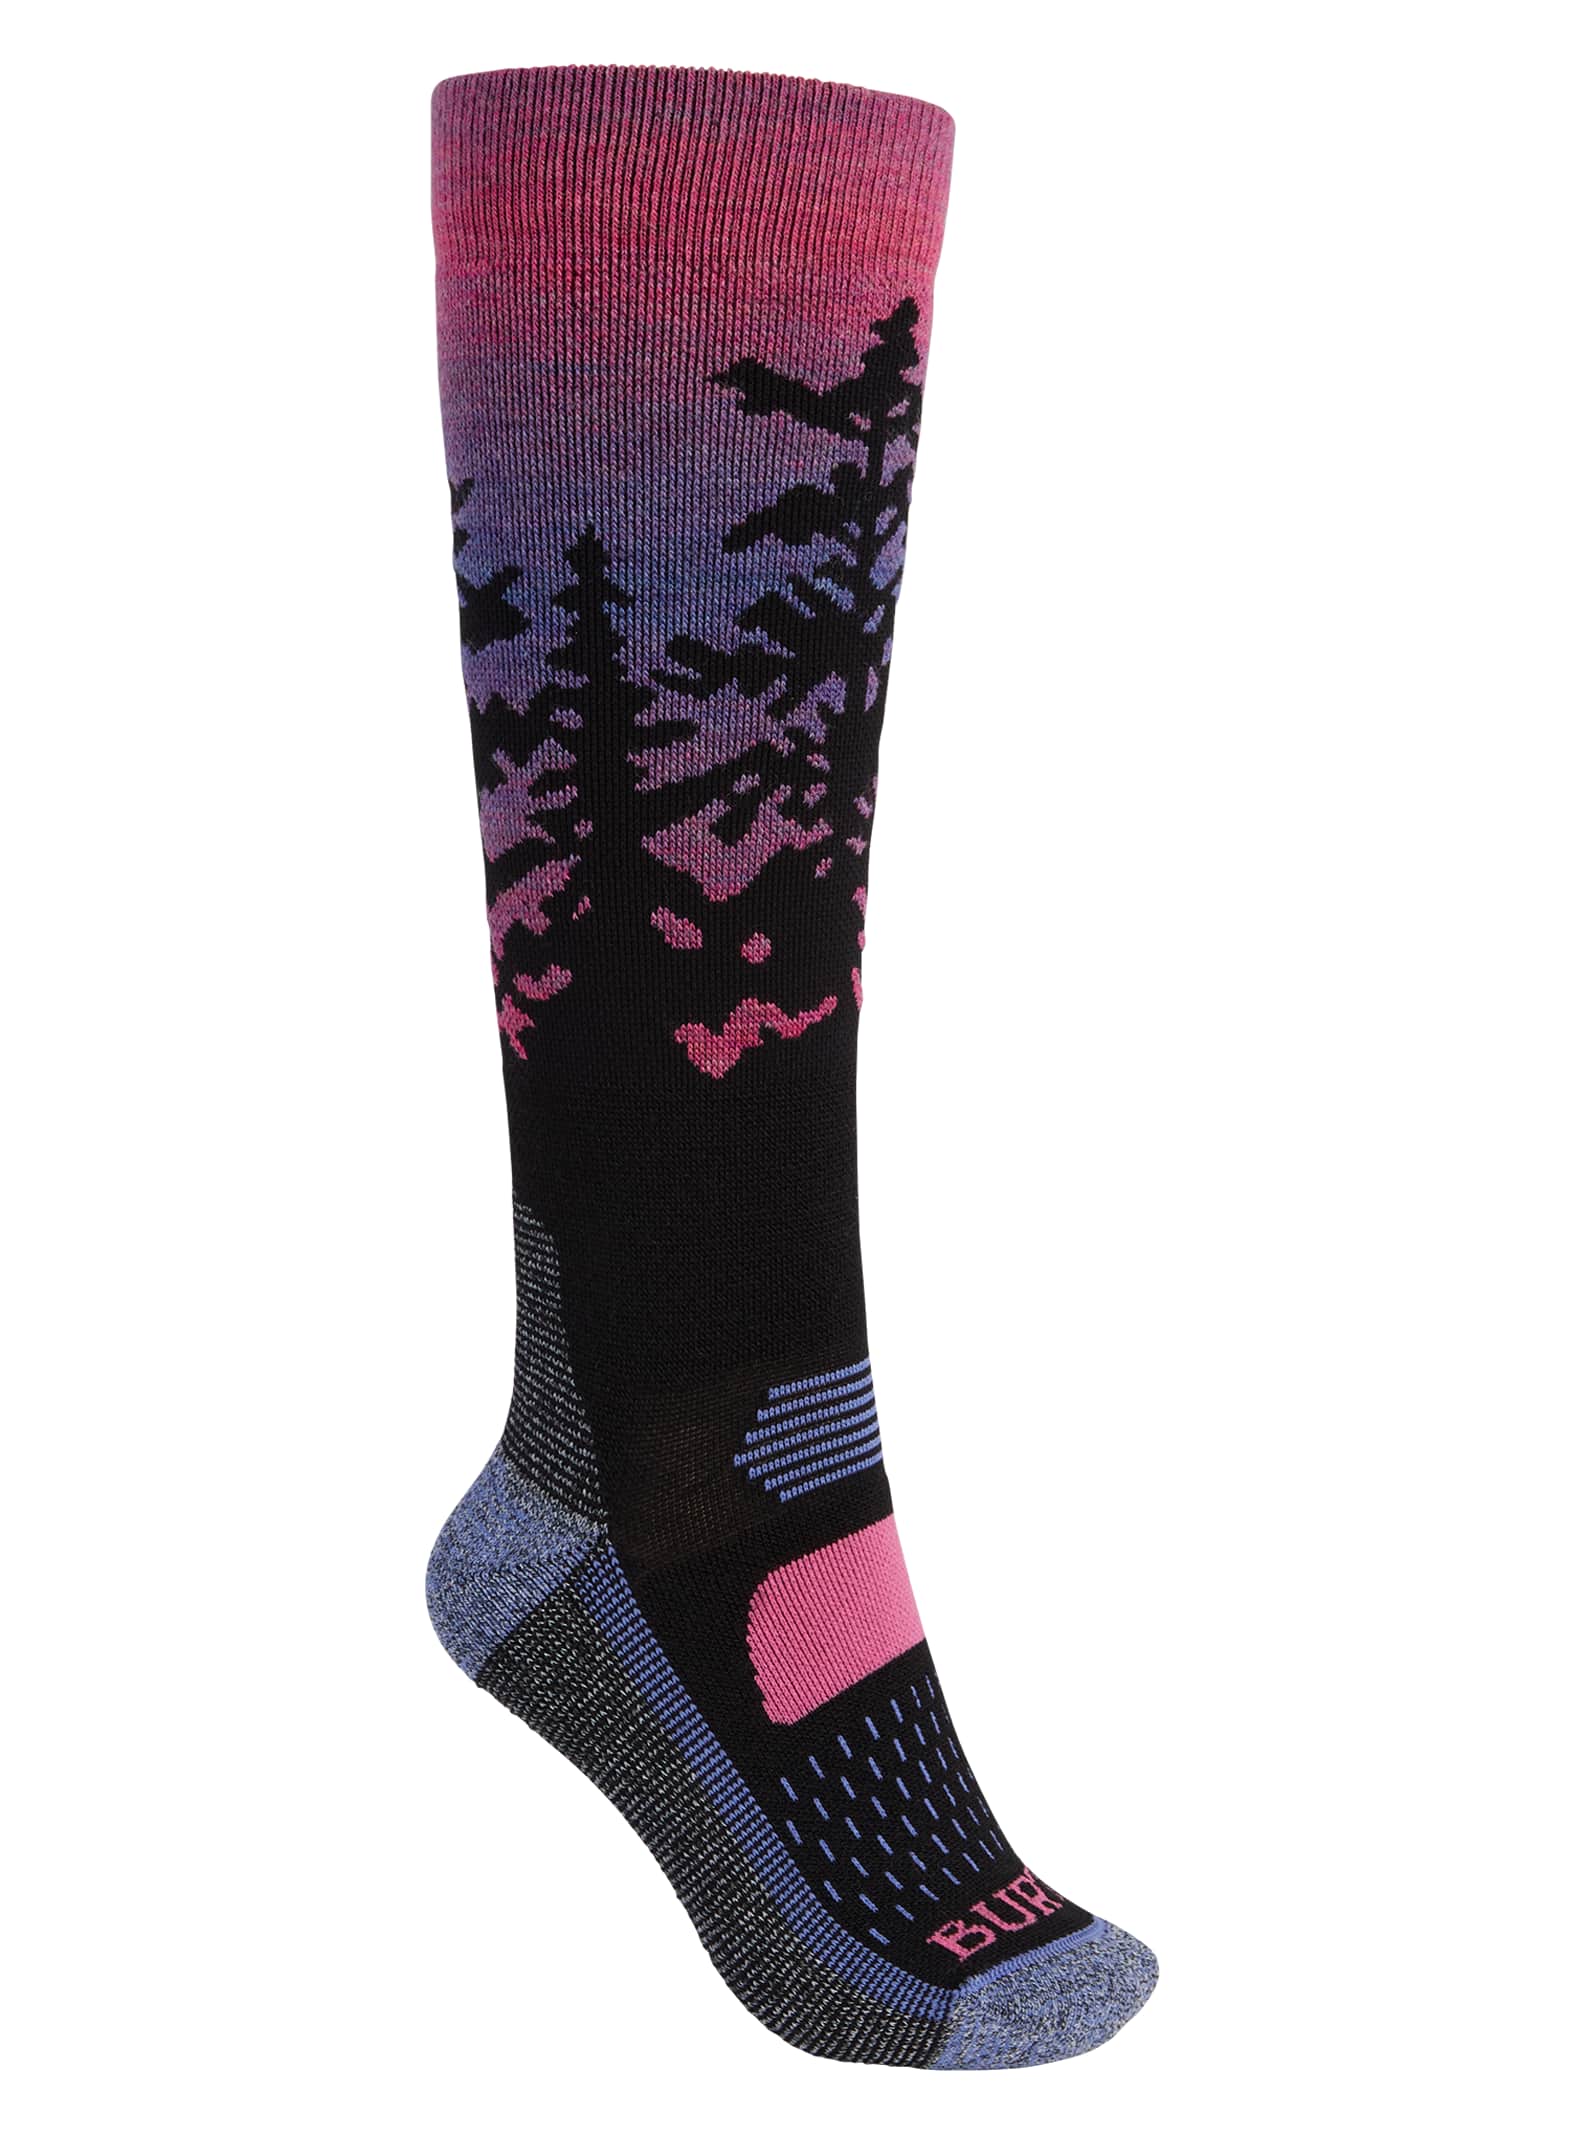 Details about   Burton Performance Midweight Sock Herren-Skisocken Winter Socks Snowboard Socks 